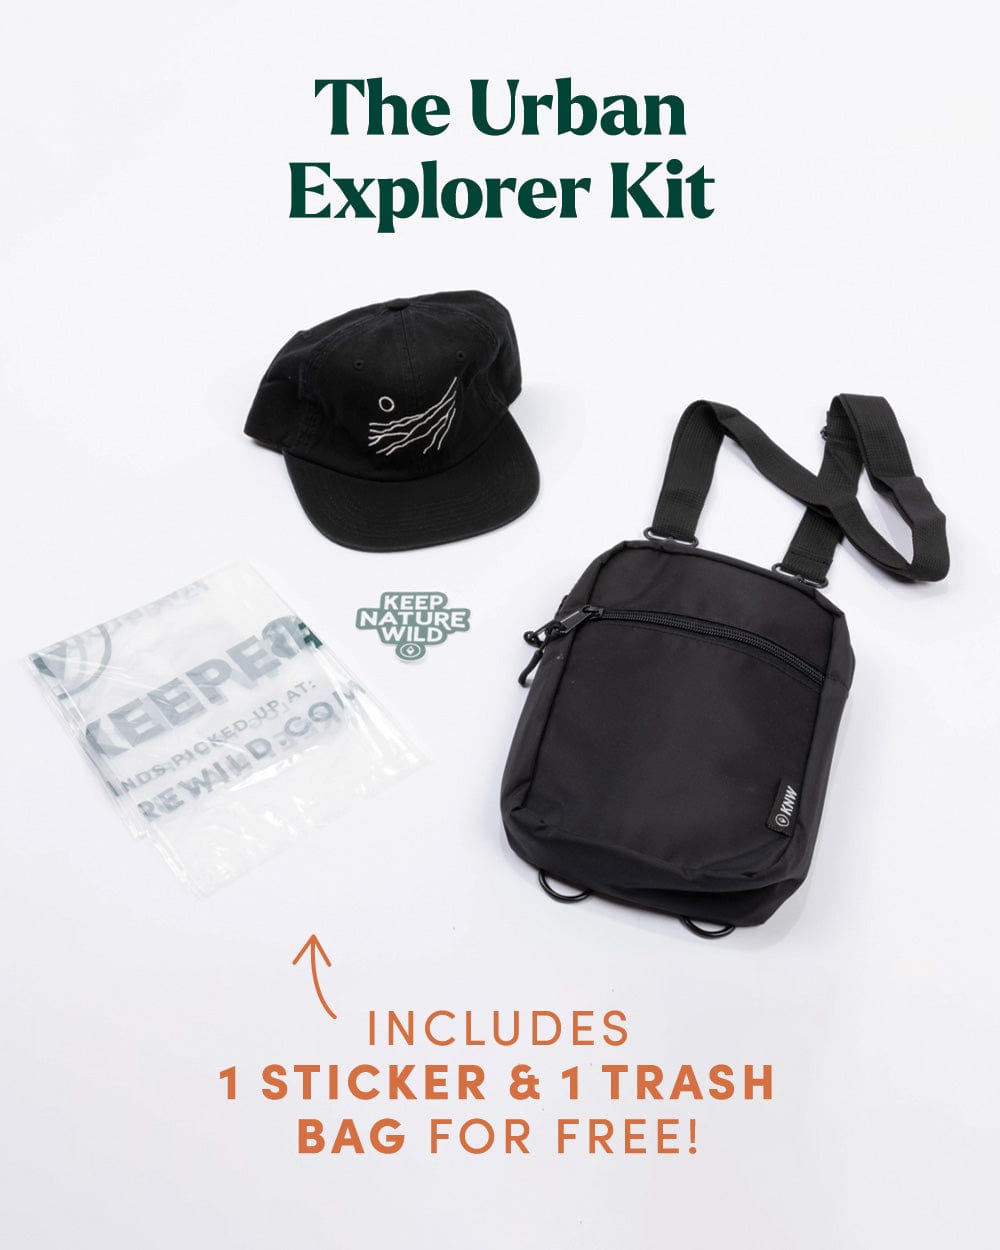 Keep Nature Wild Urban Explorer Kit - Black